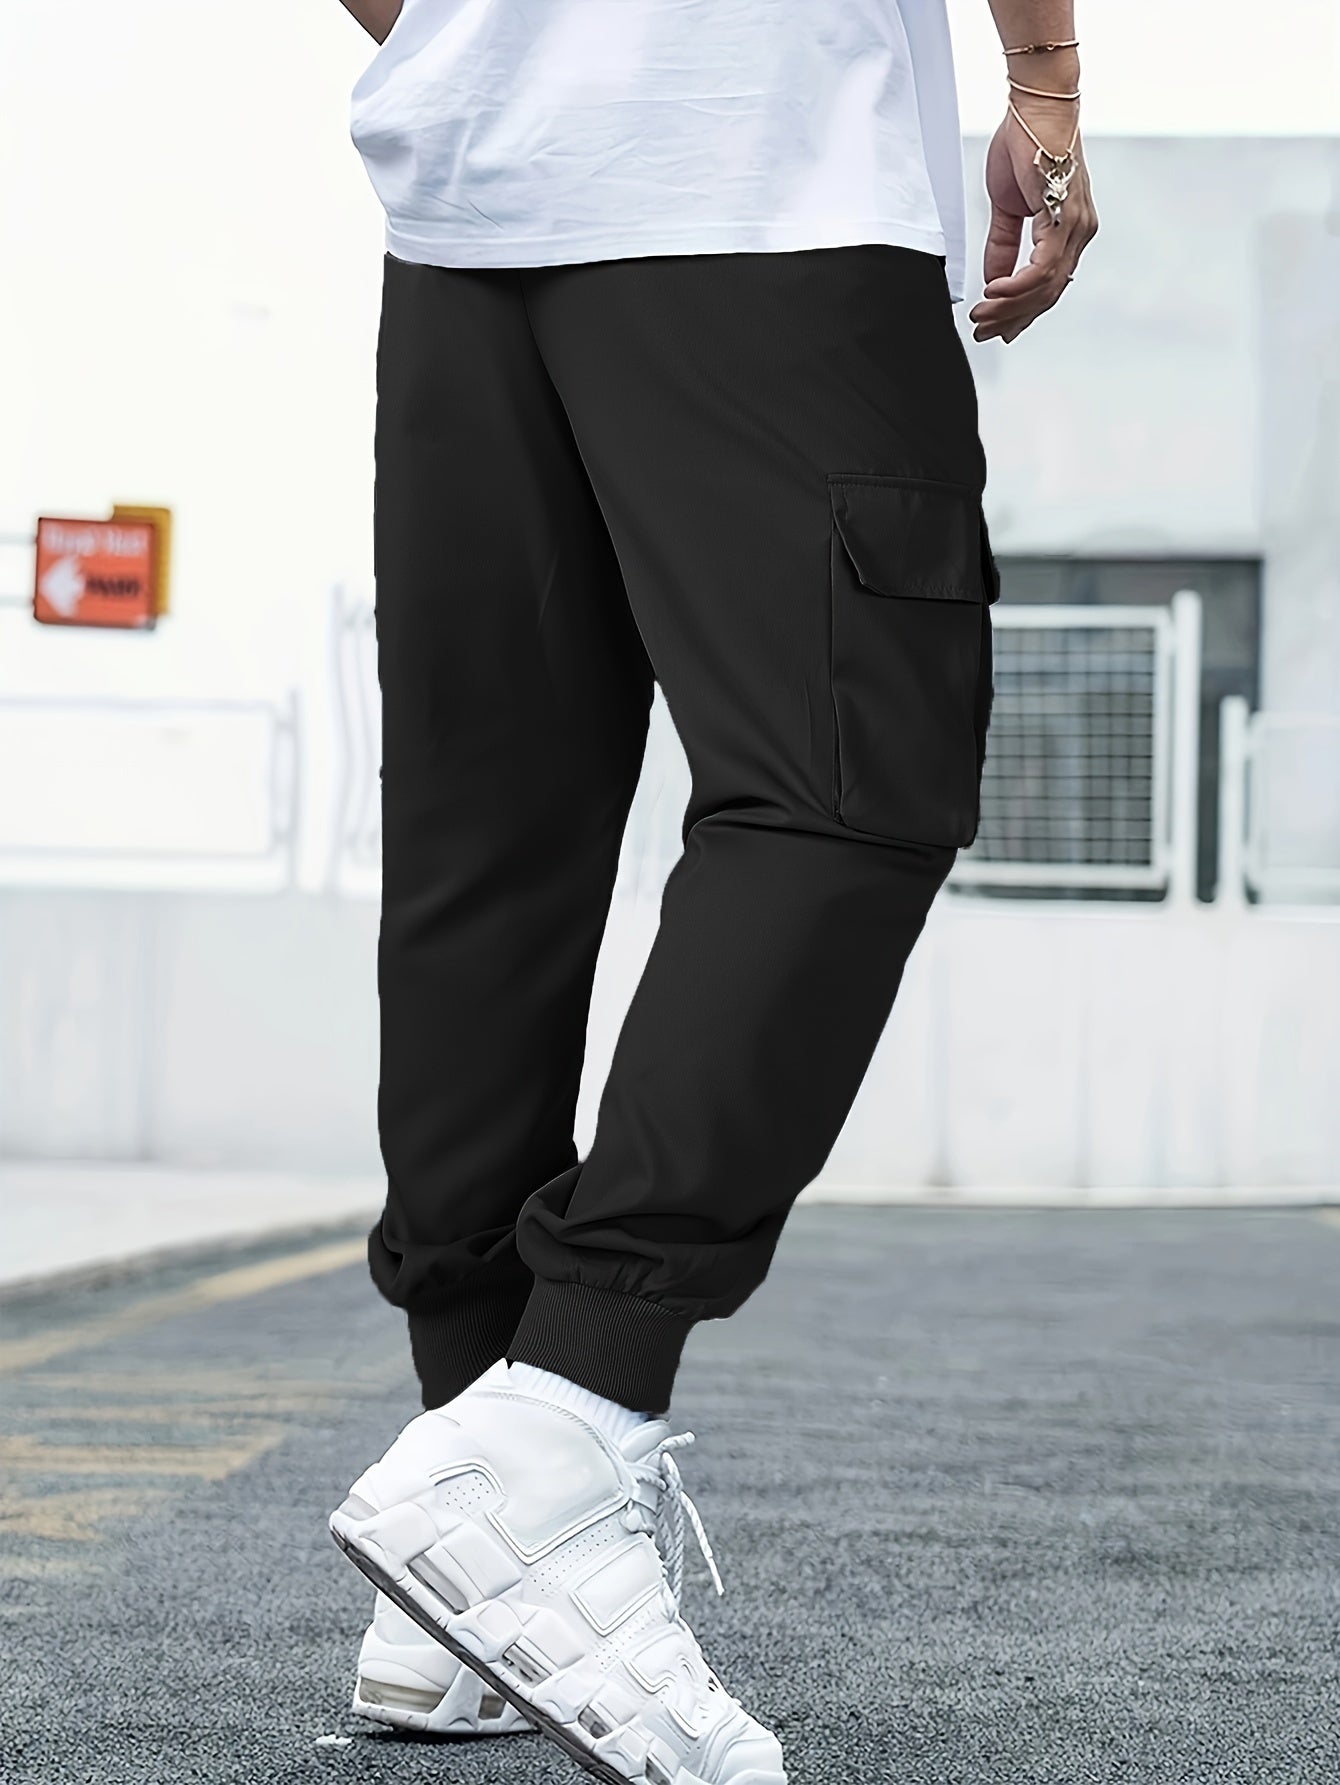 Tech Wear Multi Pocket Harem Pants, Men's Casual Stretch Waist Drawstring Cargo Pants